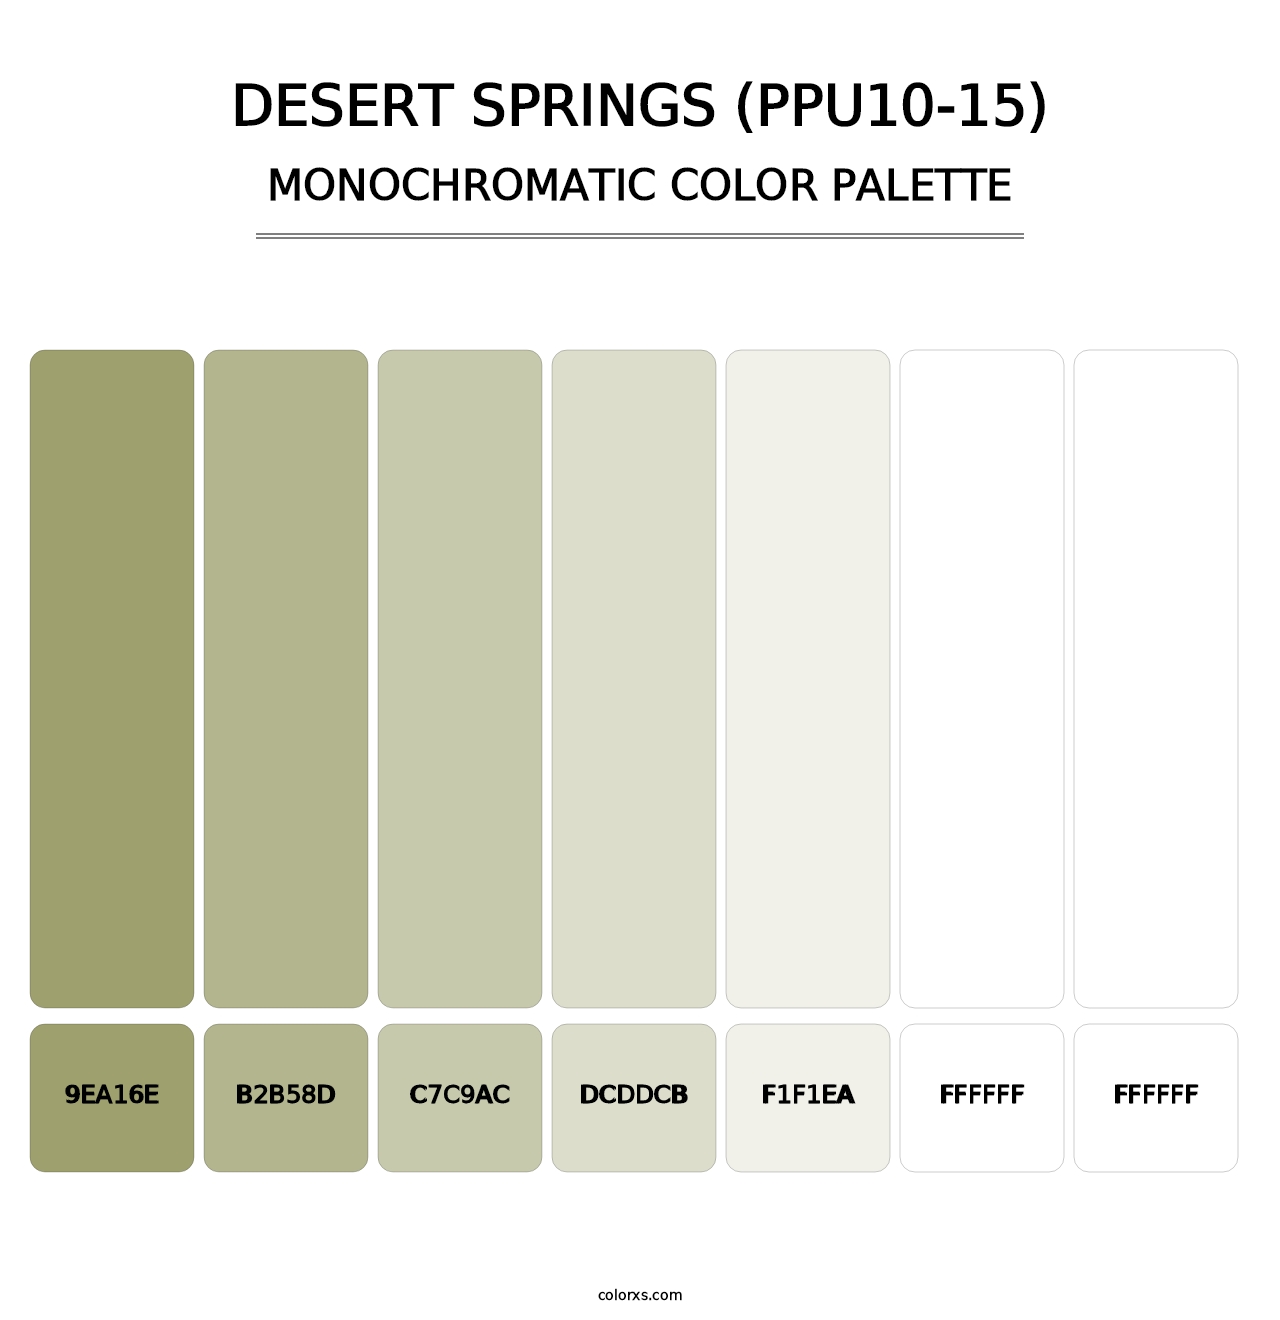 Desert Springs (PPU10-15) - Monochromatic Color Palette